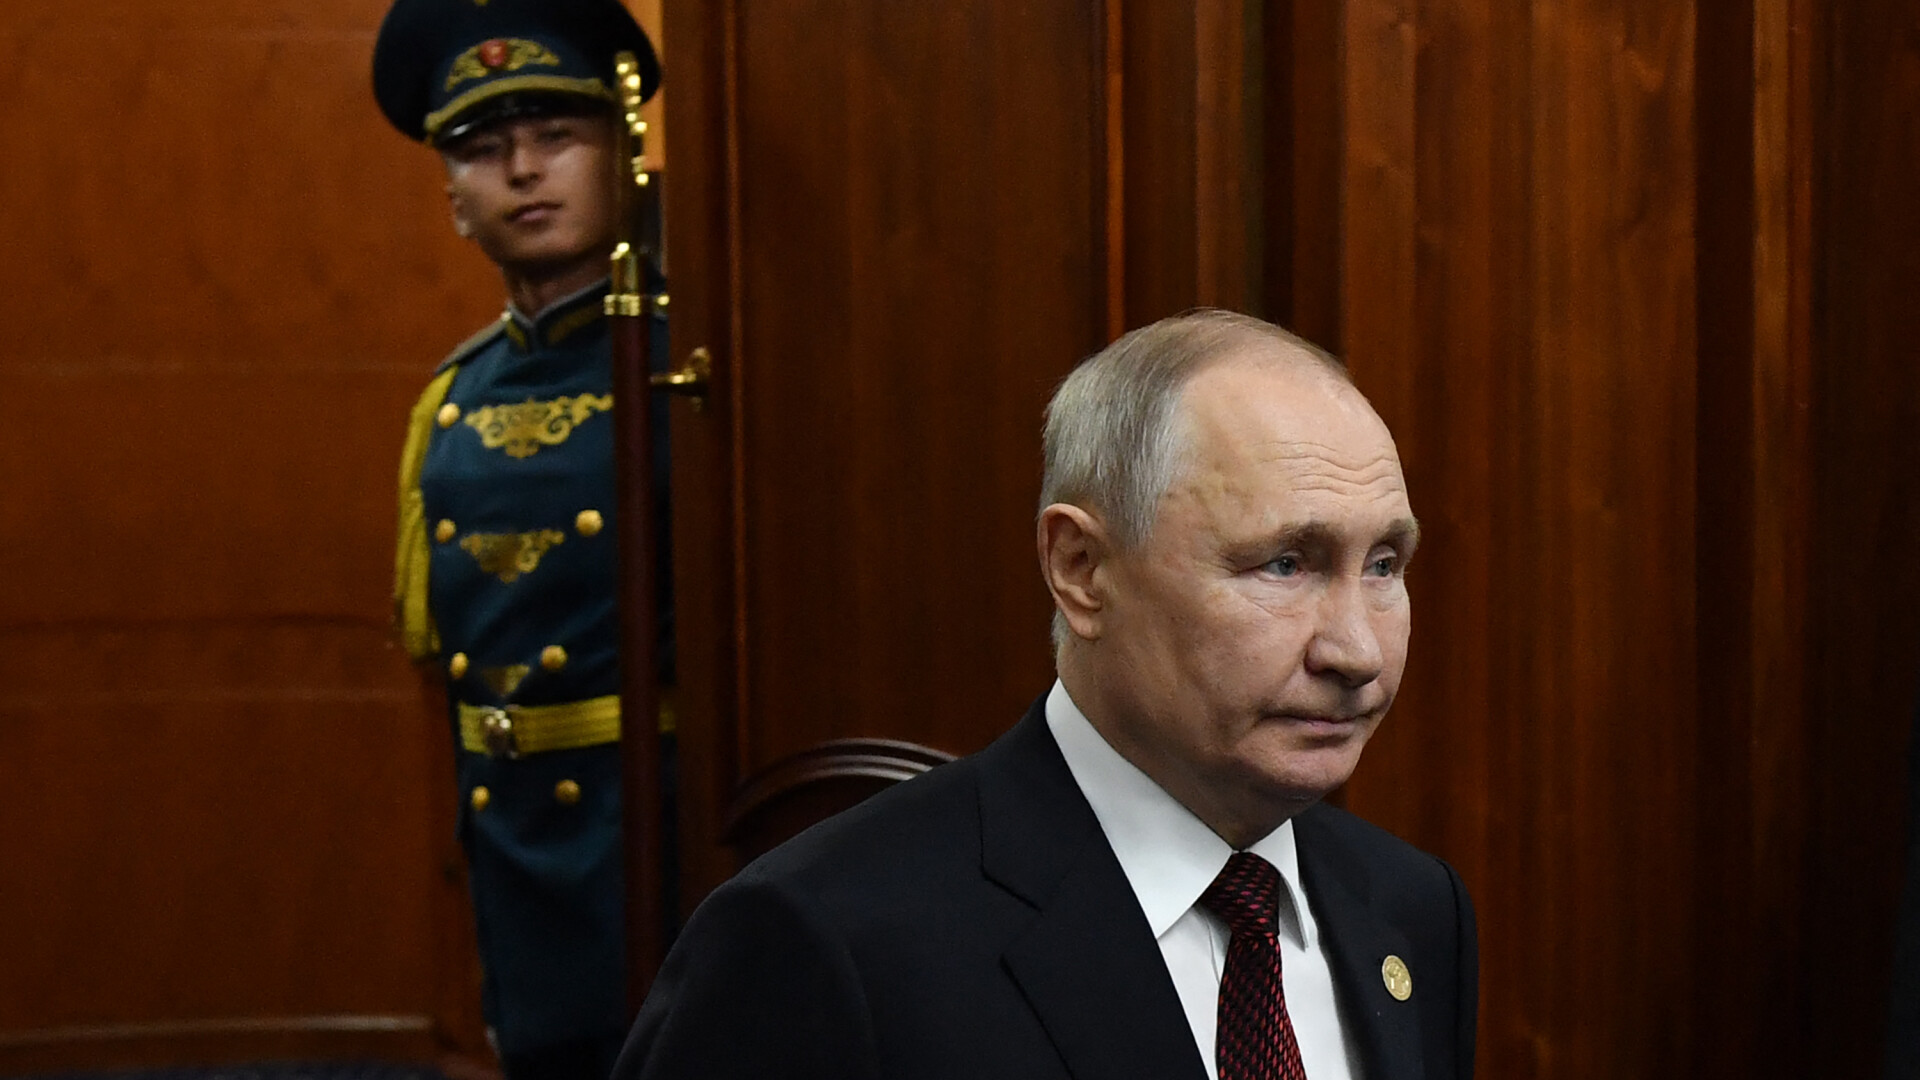 Vladimir Putin la summitul CSI